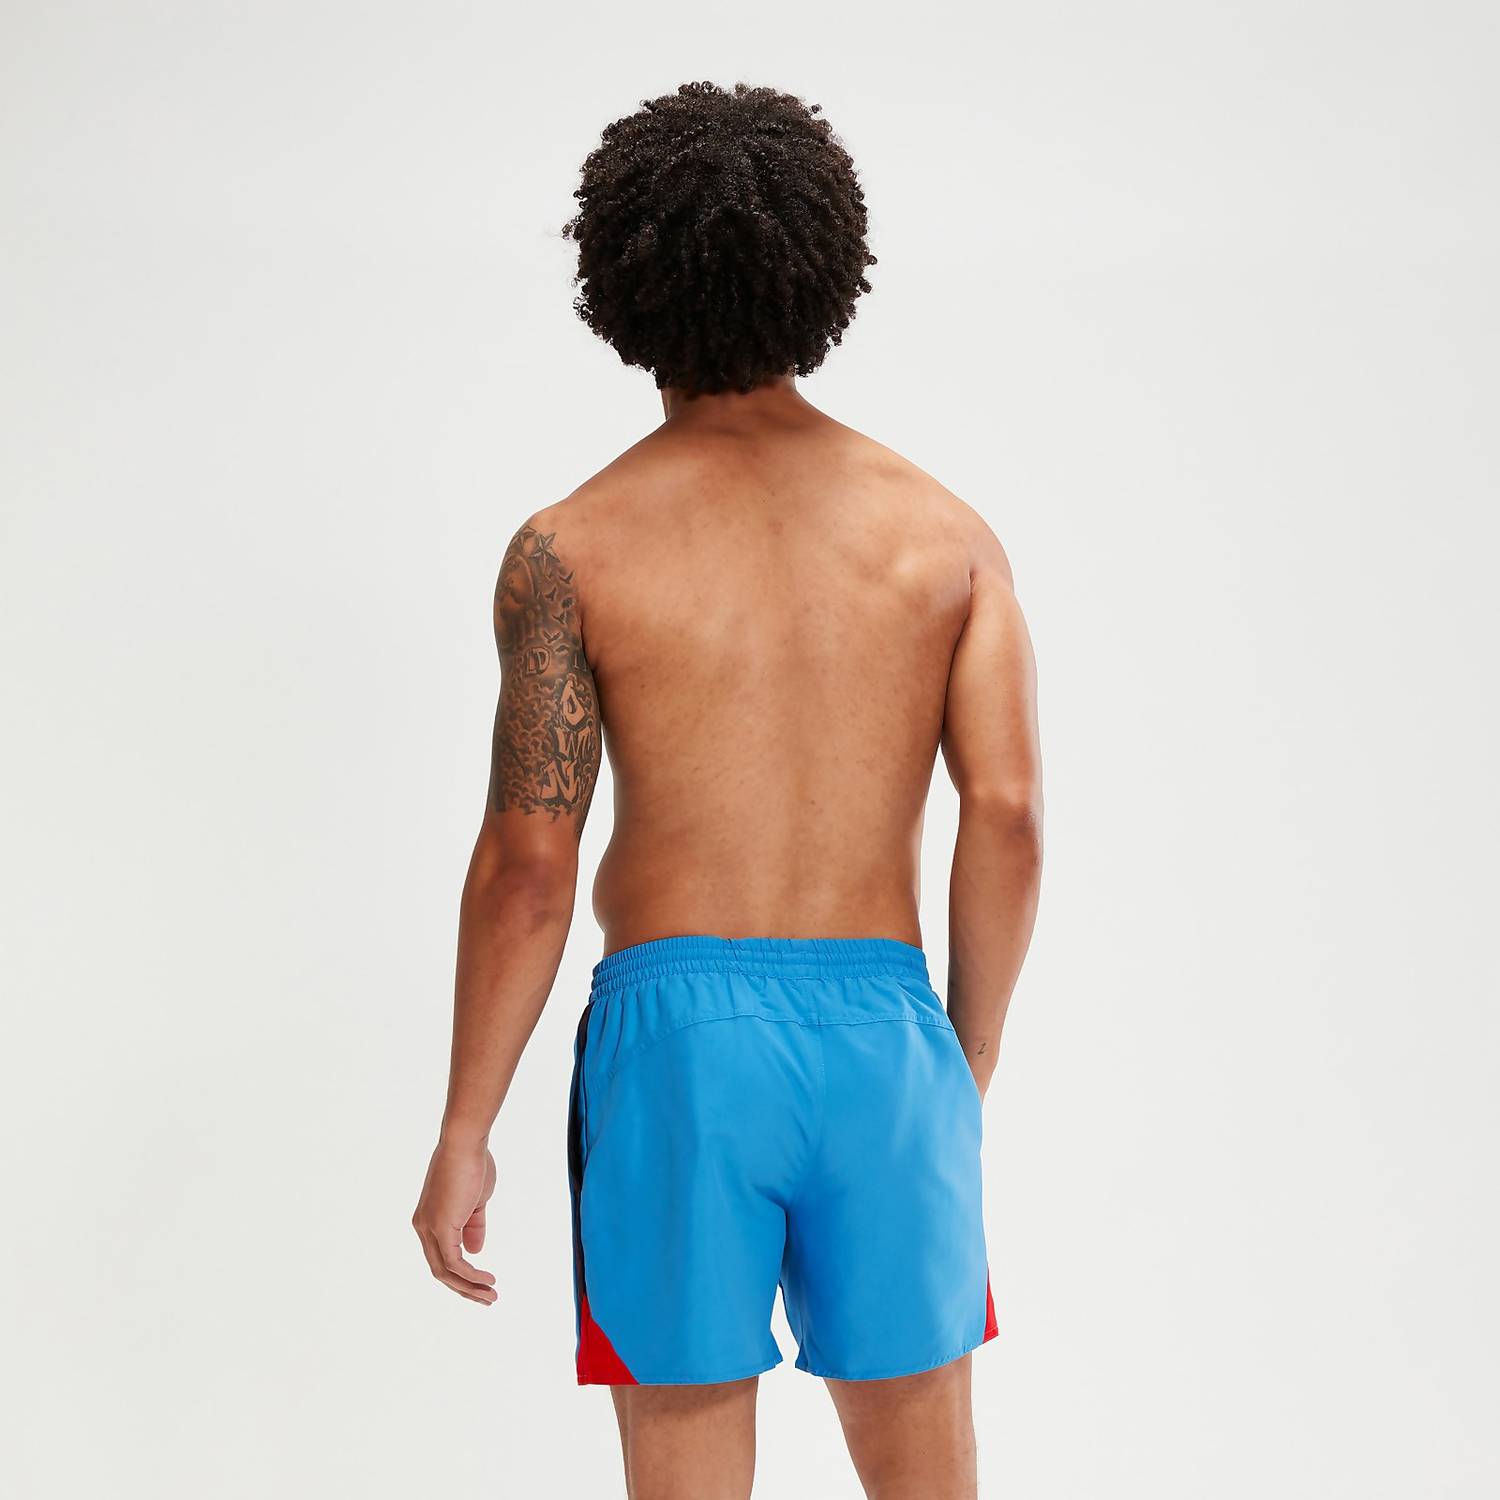 Short De Bain Homme Hyperboom Splice 40 Cm Bleu/Rouge Speedo Hommes Shorts De Bain – 2